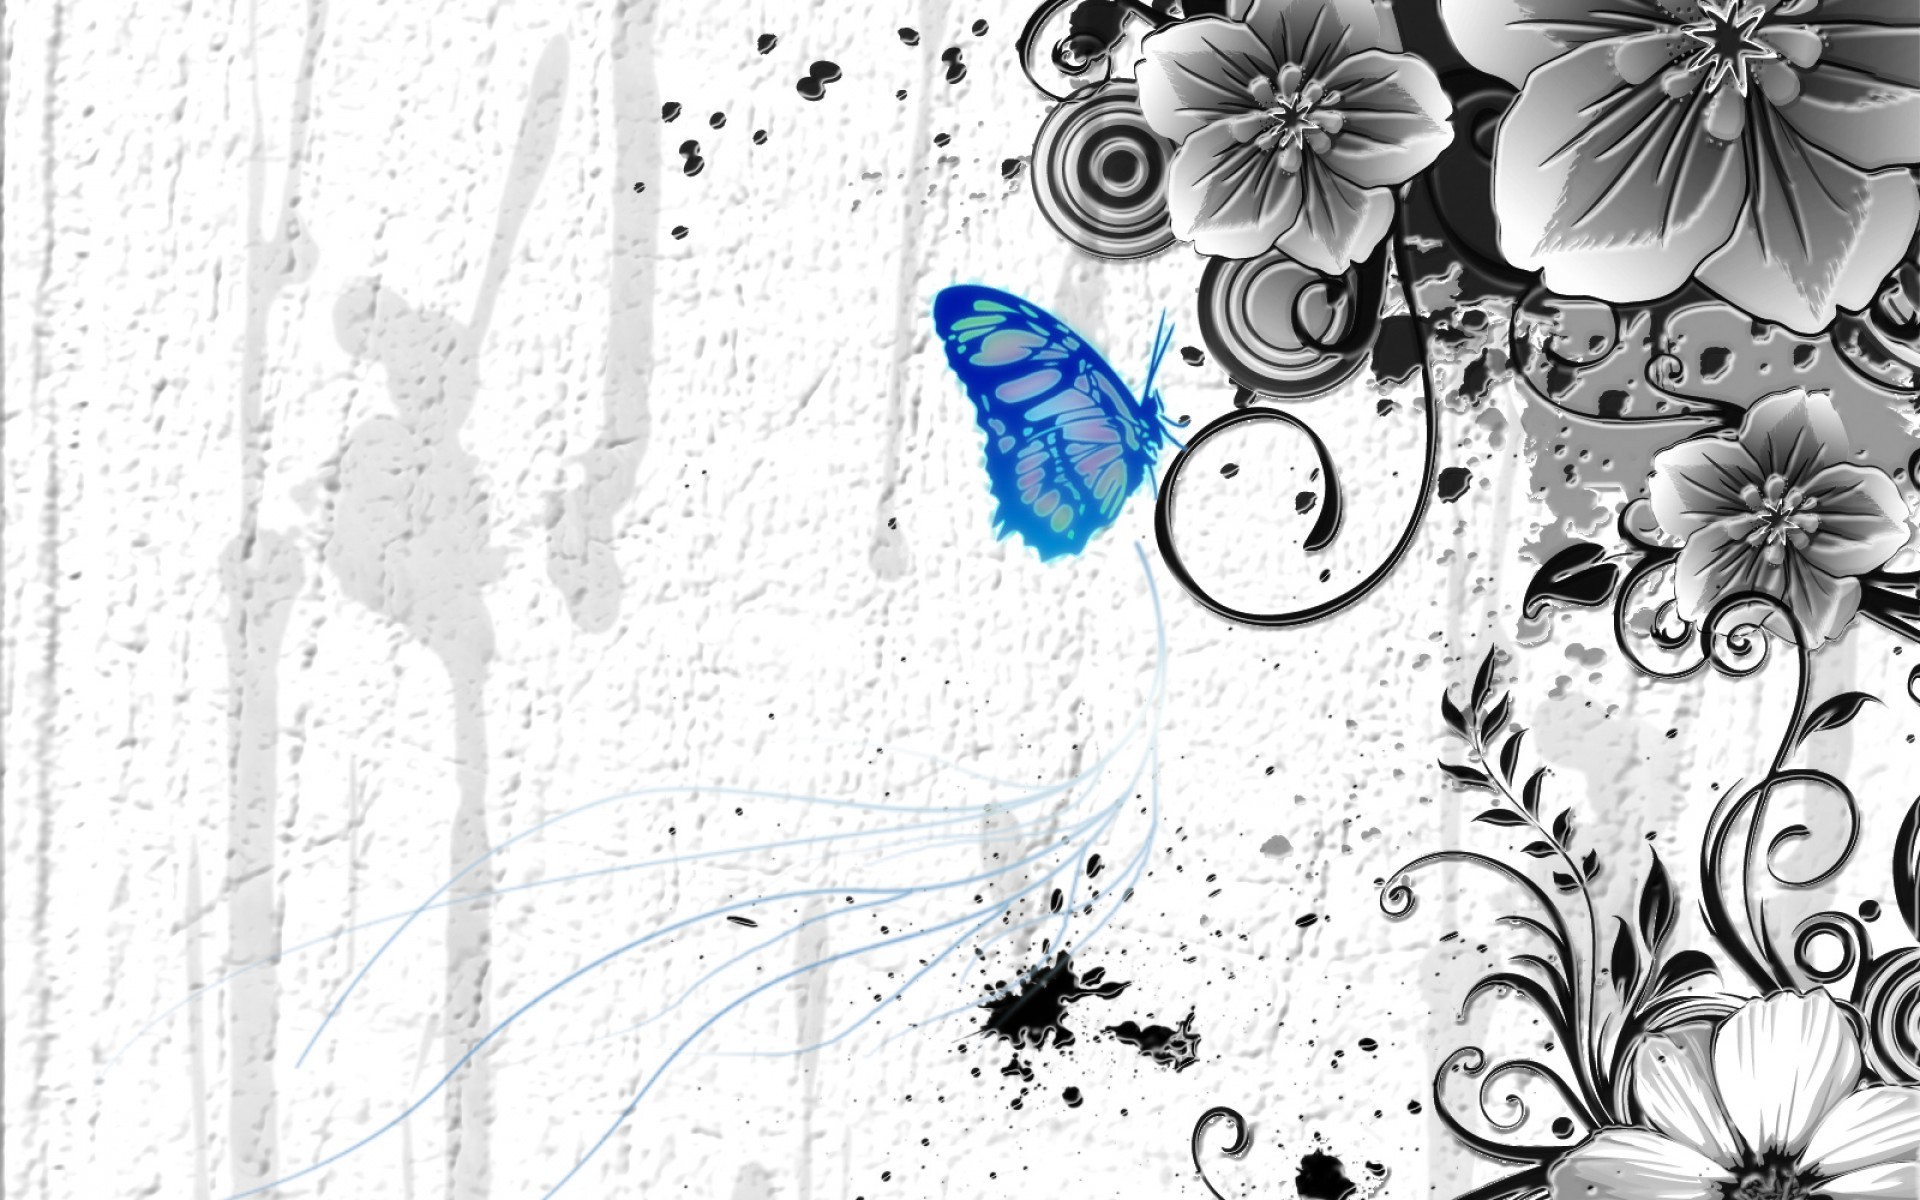 96228 Light Blue Butterfly Images Stock Photos  Vectors  Shutterstock